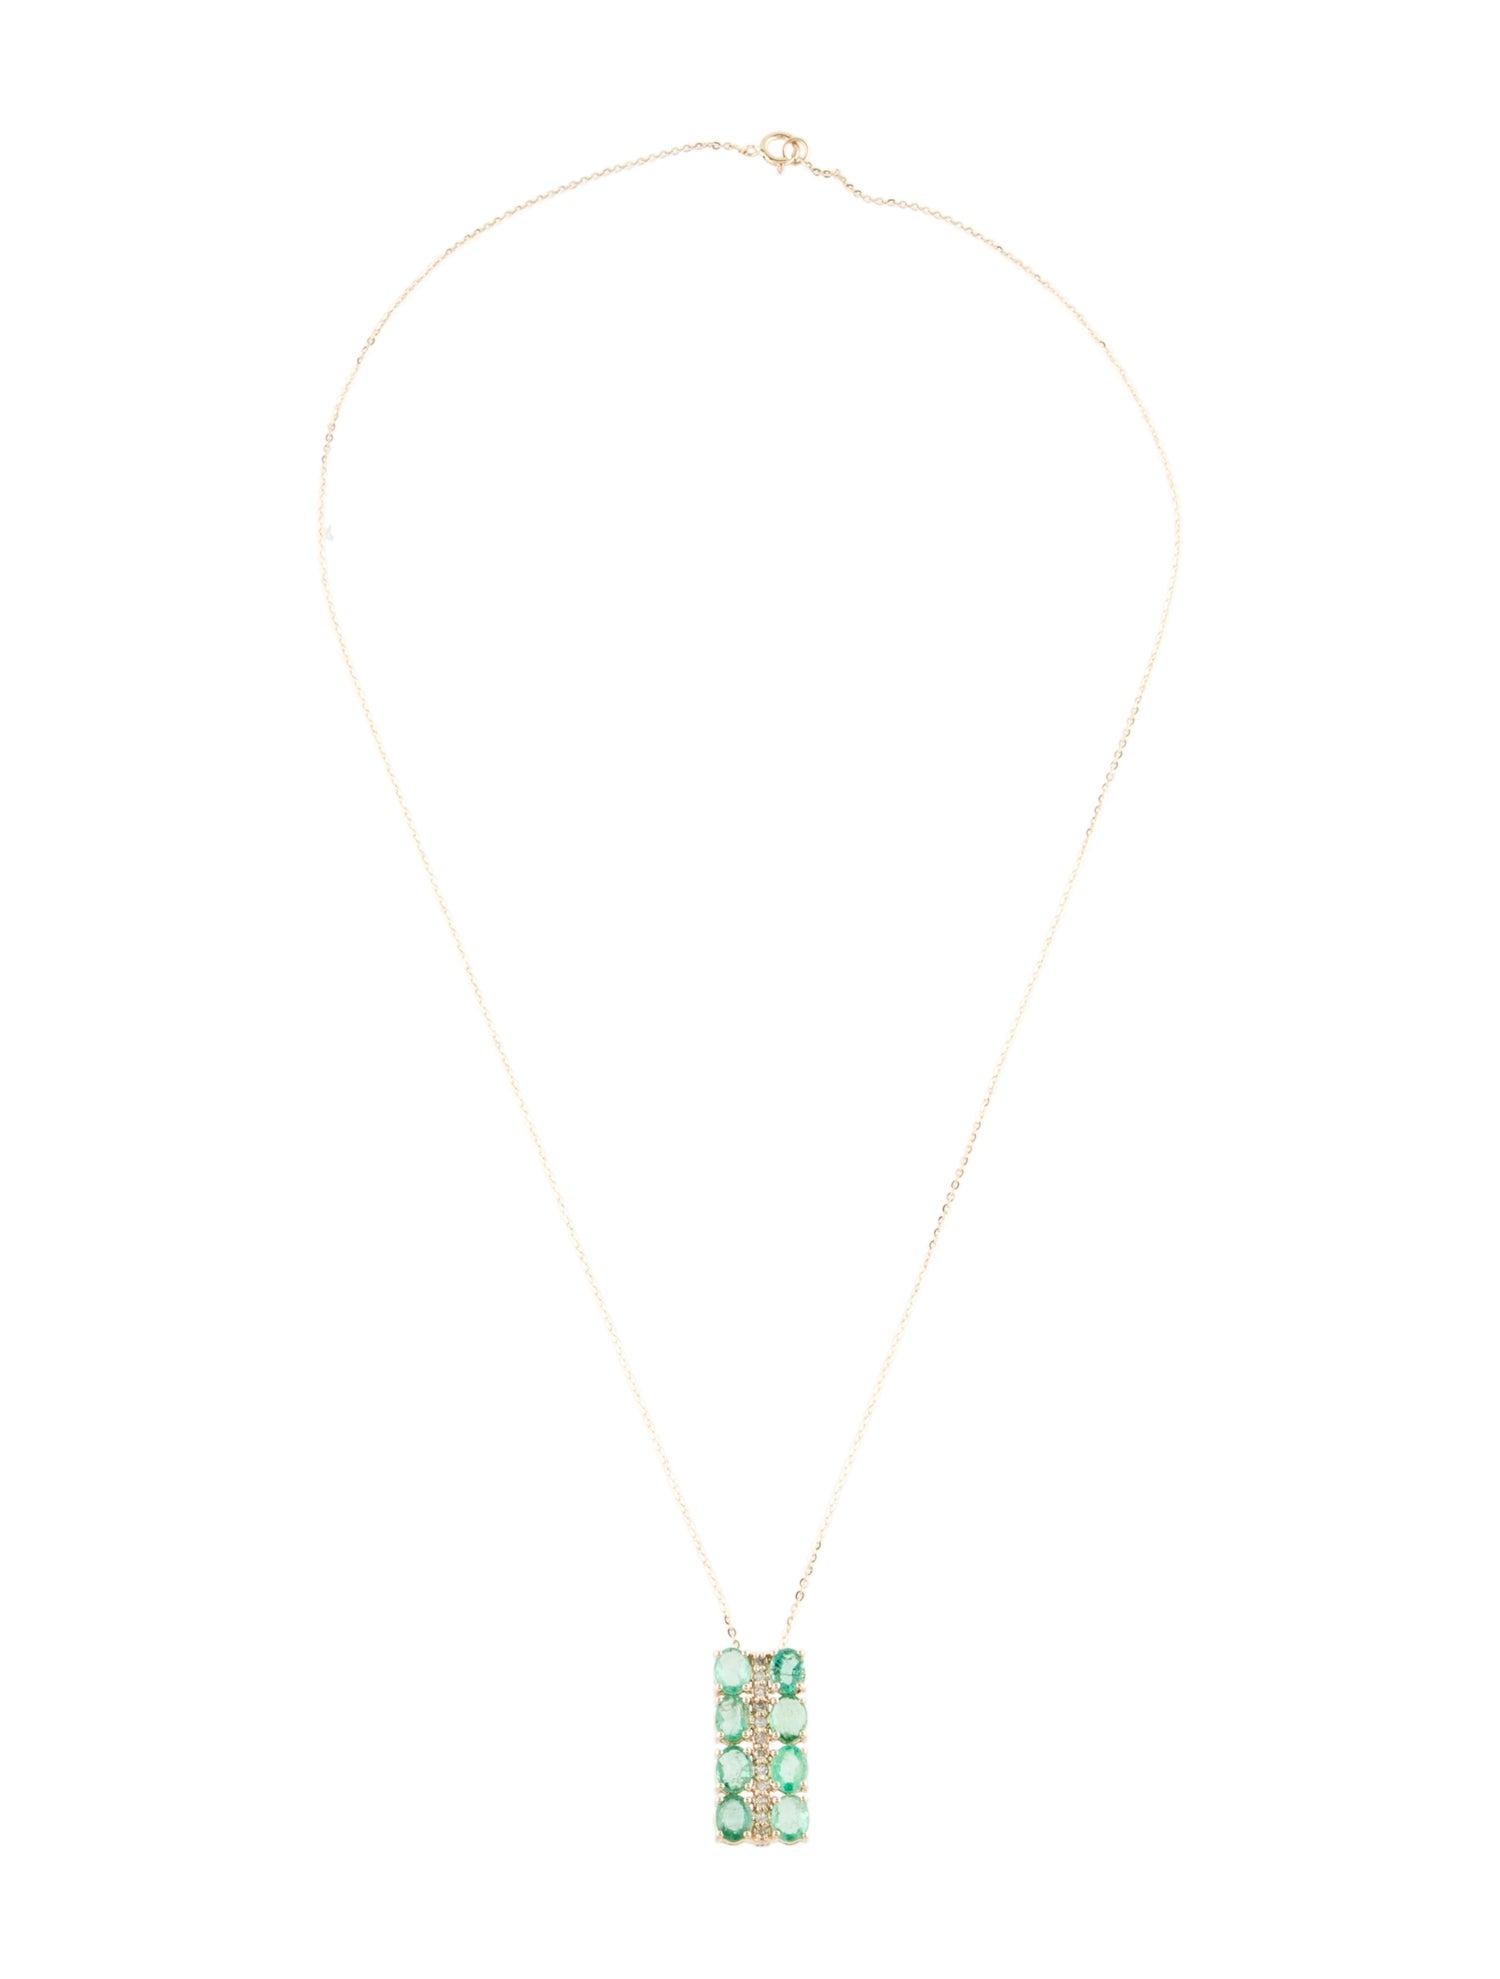 Emerald Cut Stunning 14K Emerald & Diamond Pendant Necklace  Elegant Gemstone Sparkle For Sale